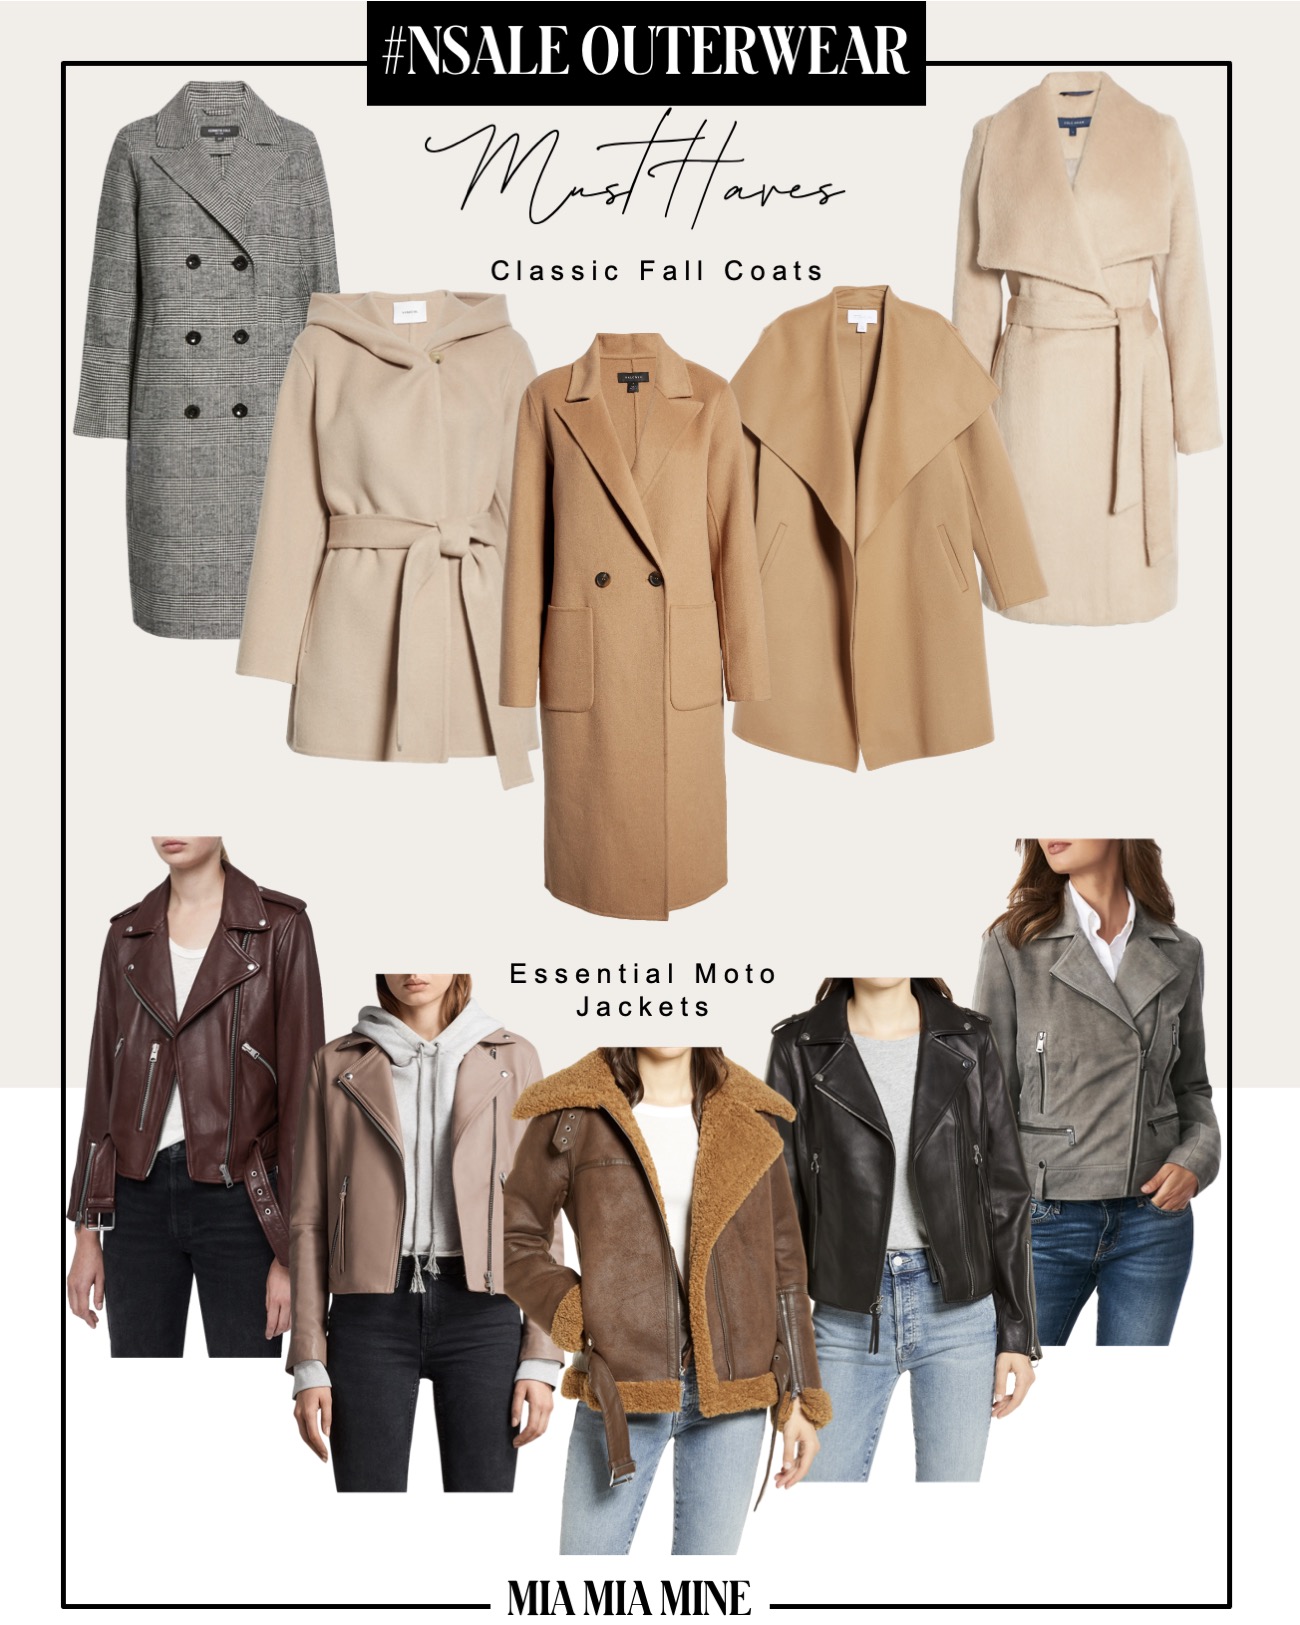 nordstrom anniversary sale 2020 outerwear picks by fashion blogger miamiamine